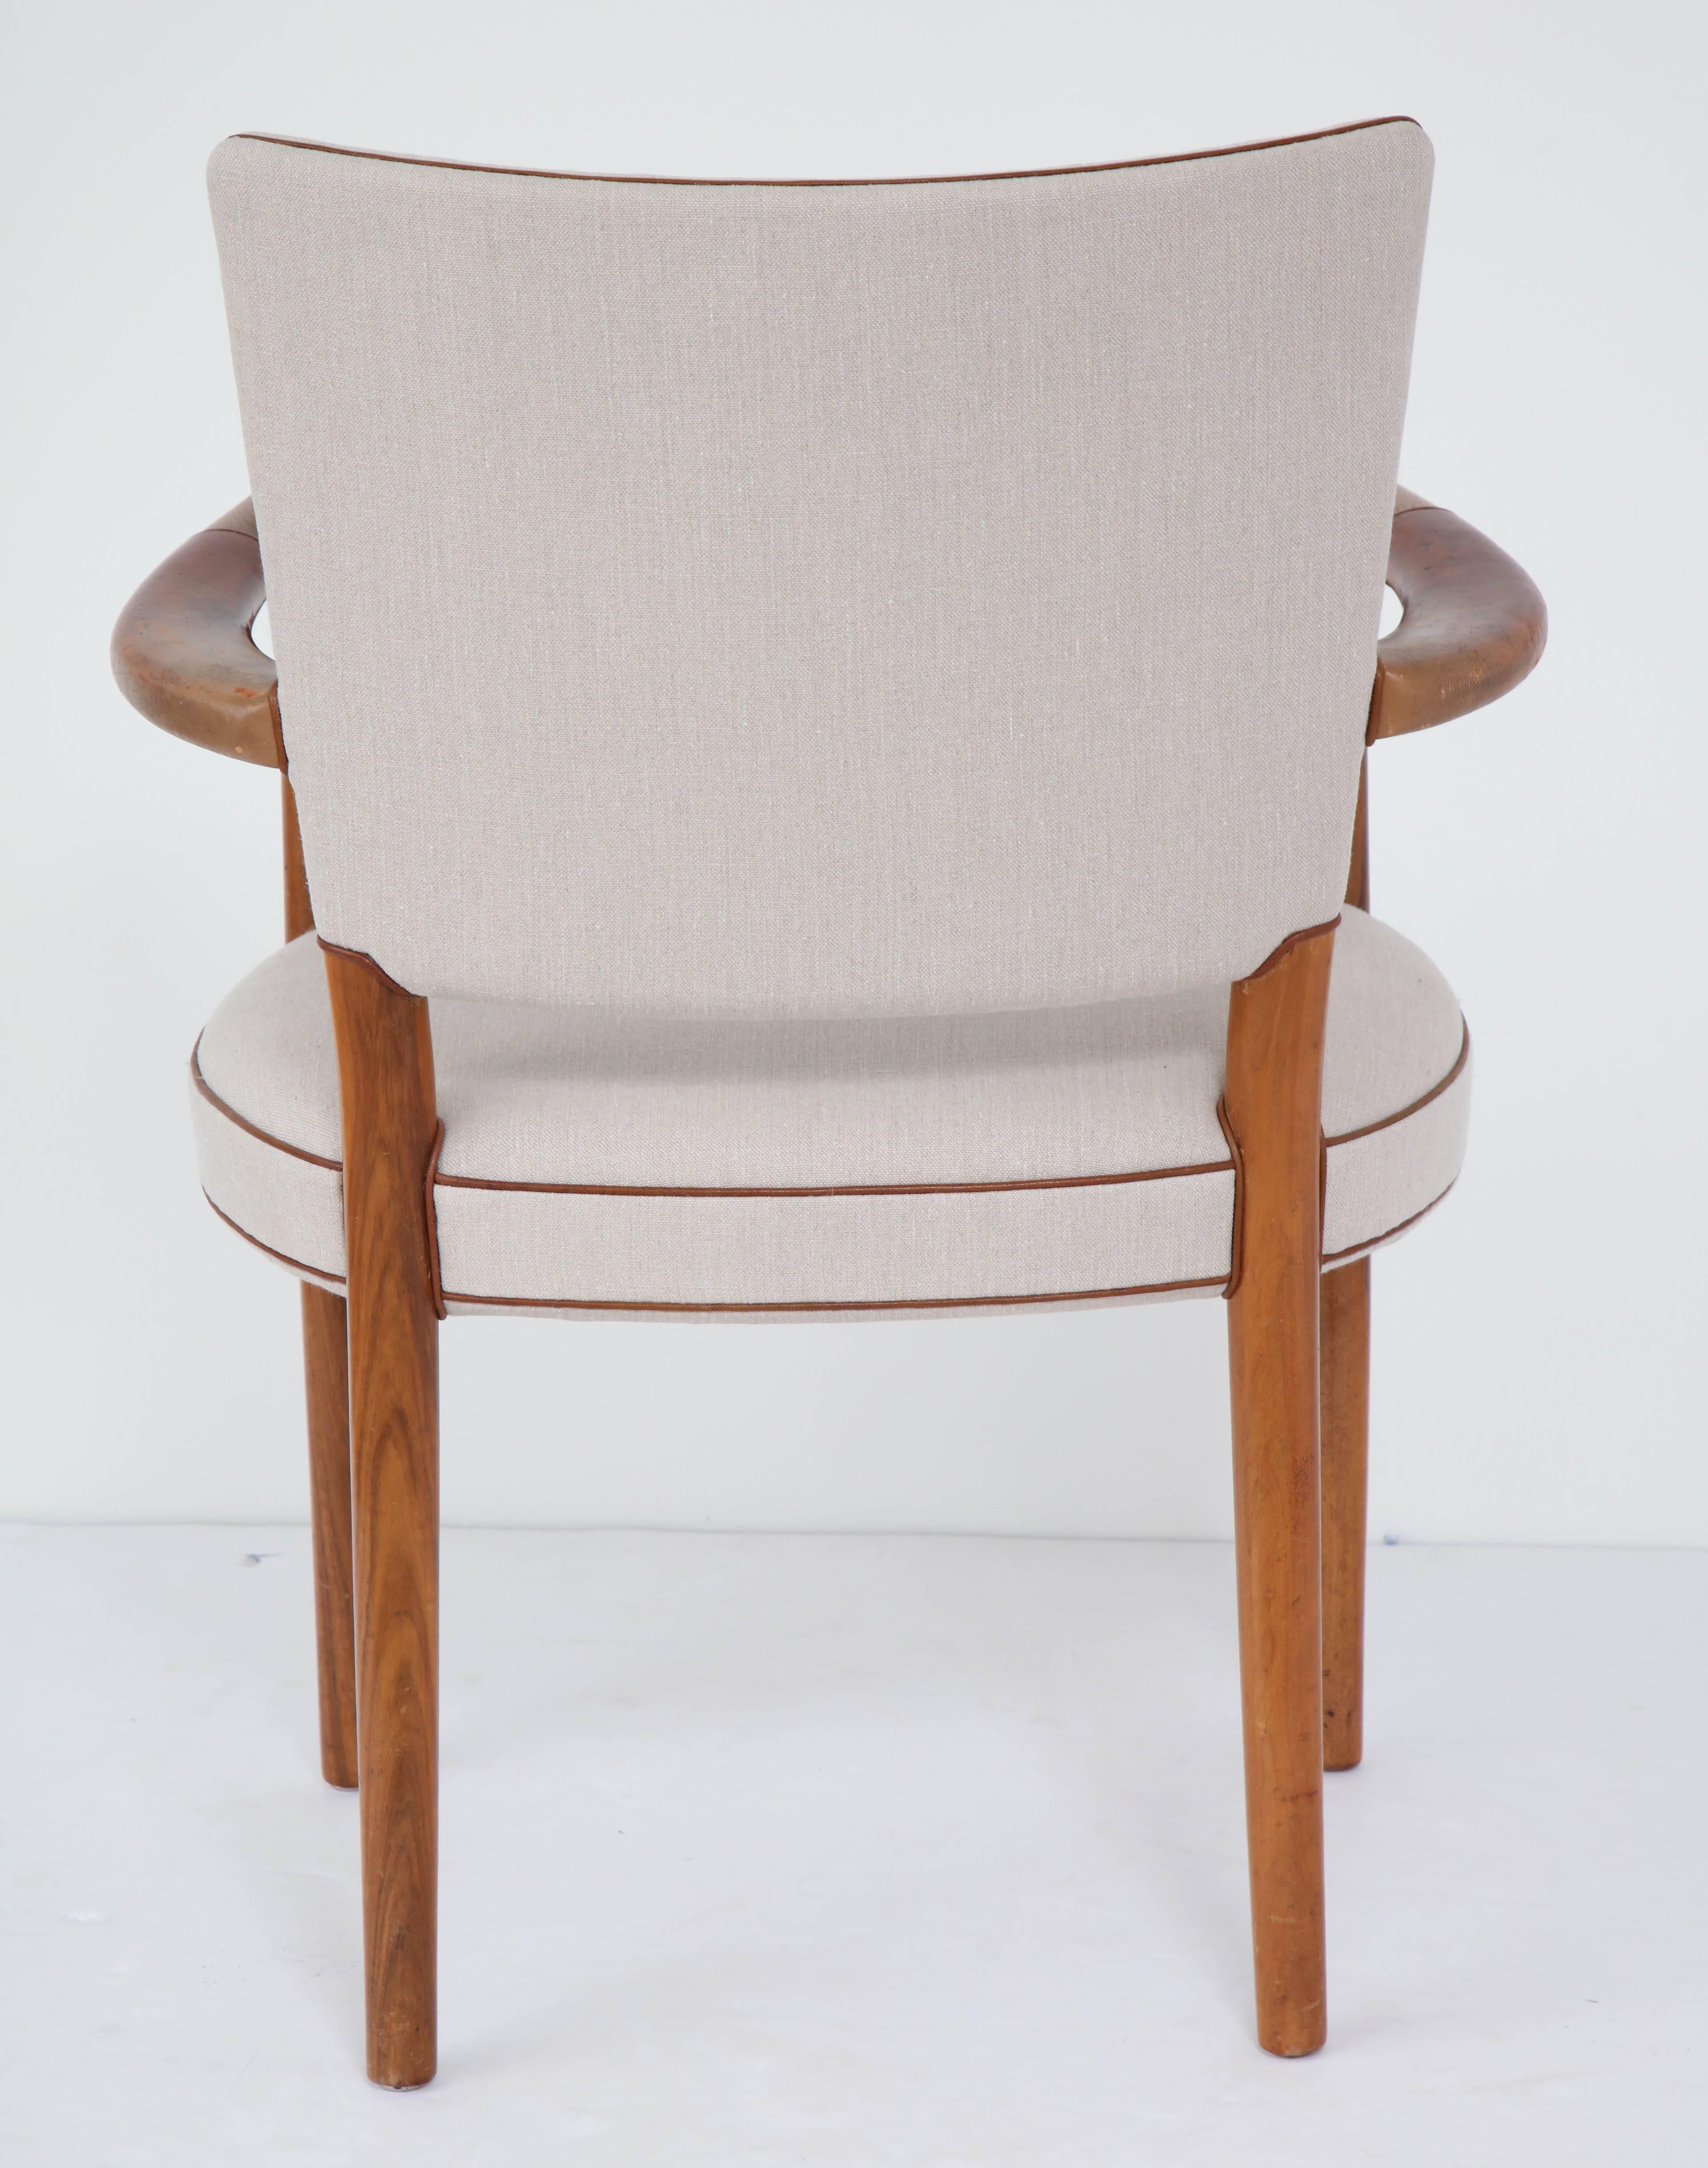 Rare Danish Design Chair by Flemming Lassen and Arne Jacobsen, circa 1950s 4